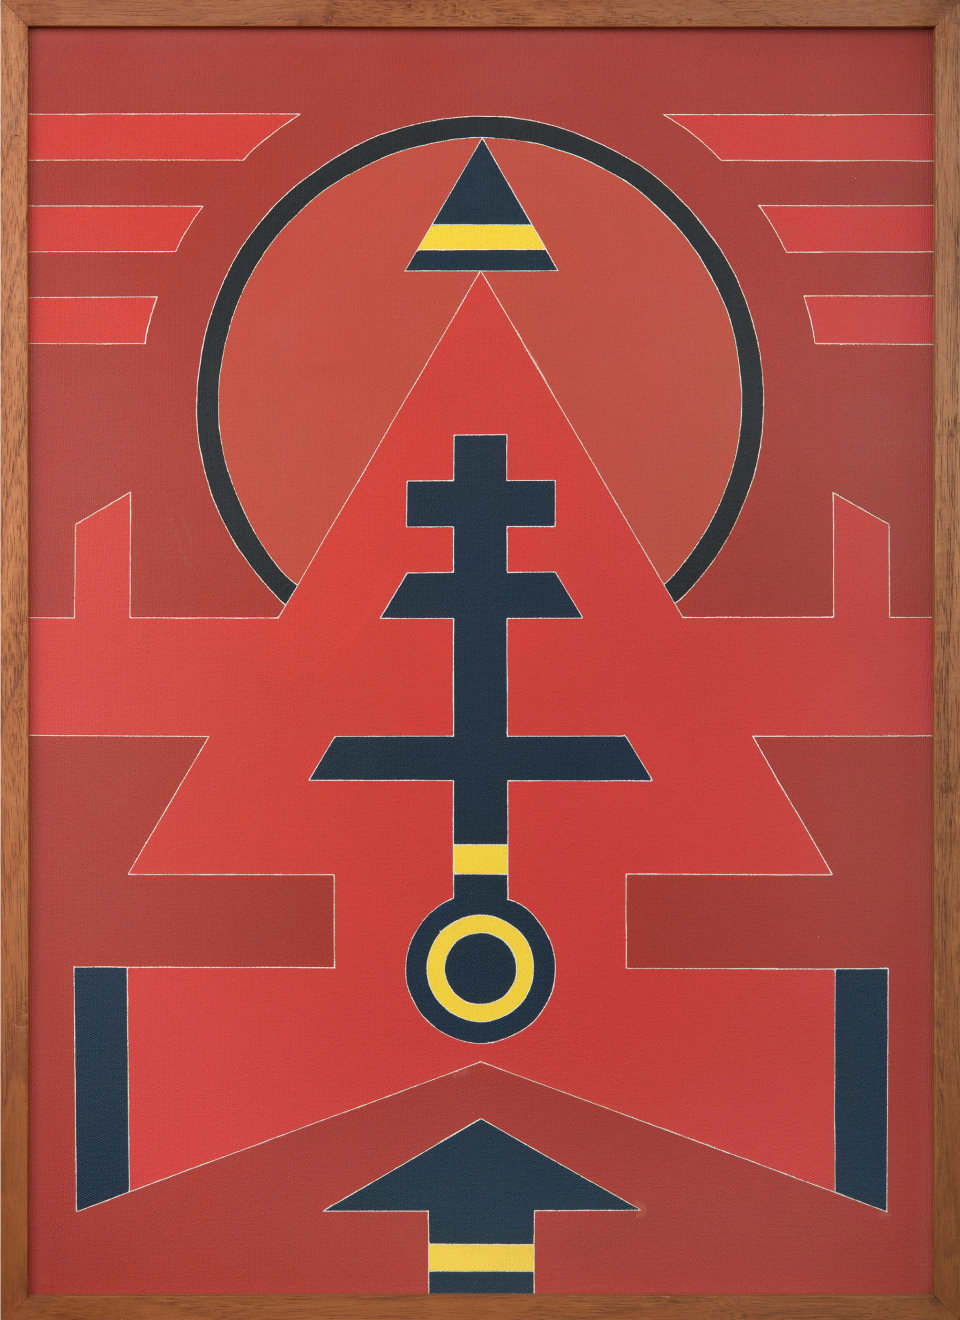 Rubem Valentim, Emblema-87, 1987